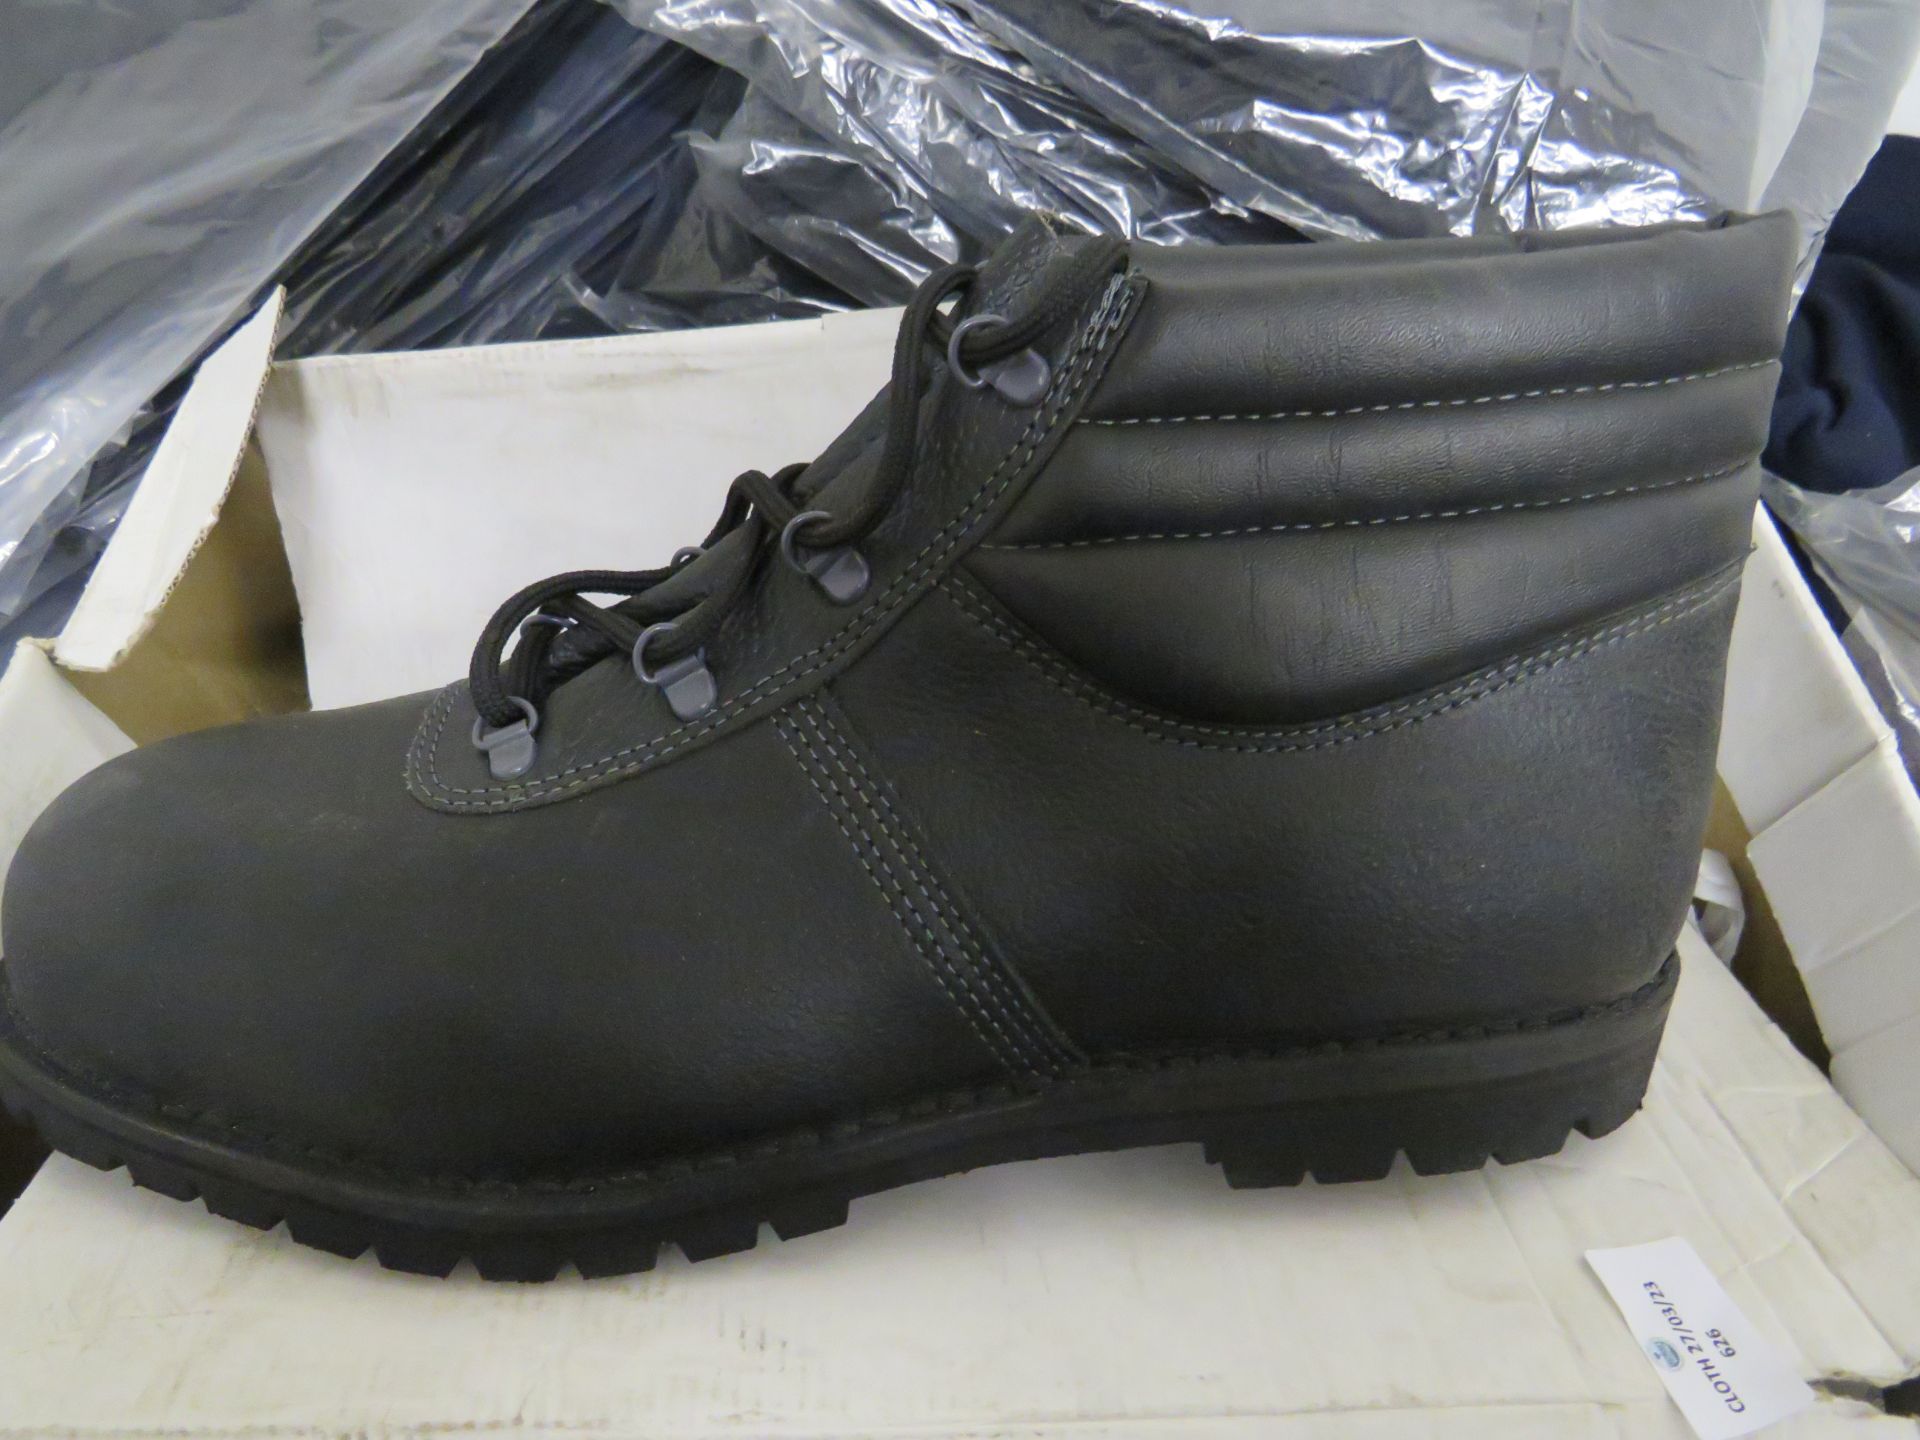 Vibram Steel Toe Cap Boots Black Size 14.5 Unused & Boxed